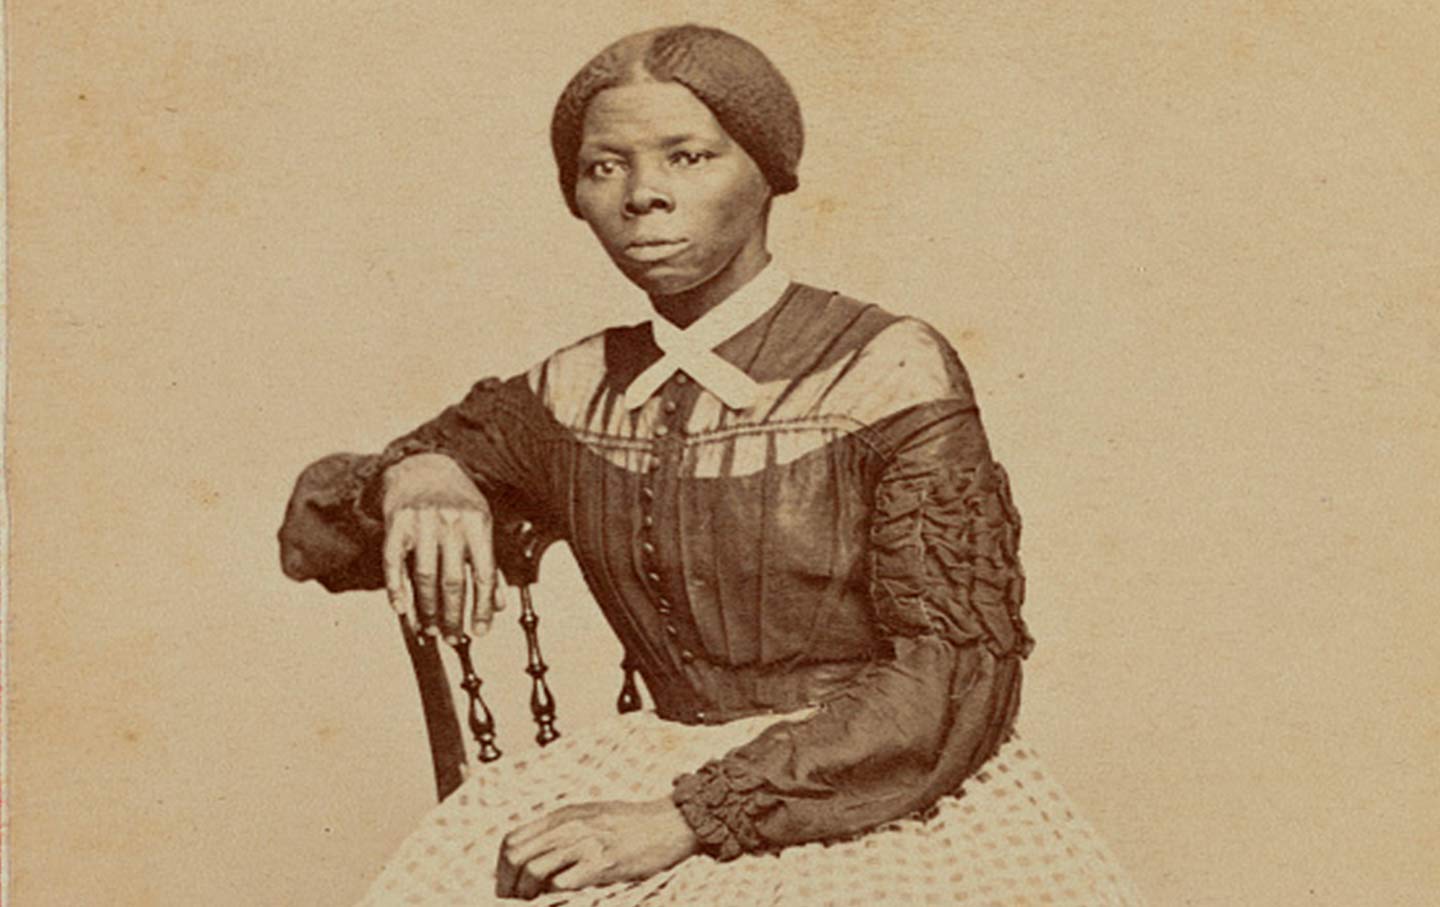 Harriet Tubman in 1868 or 1869.